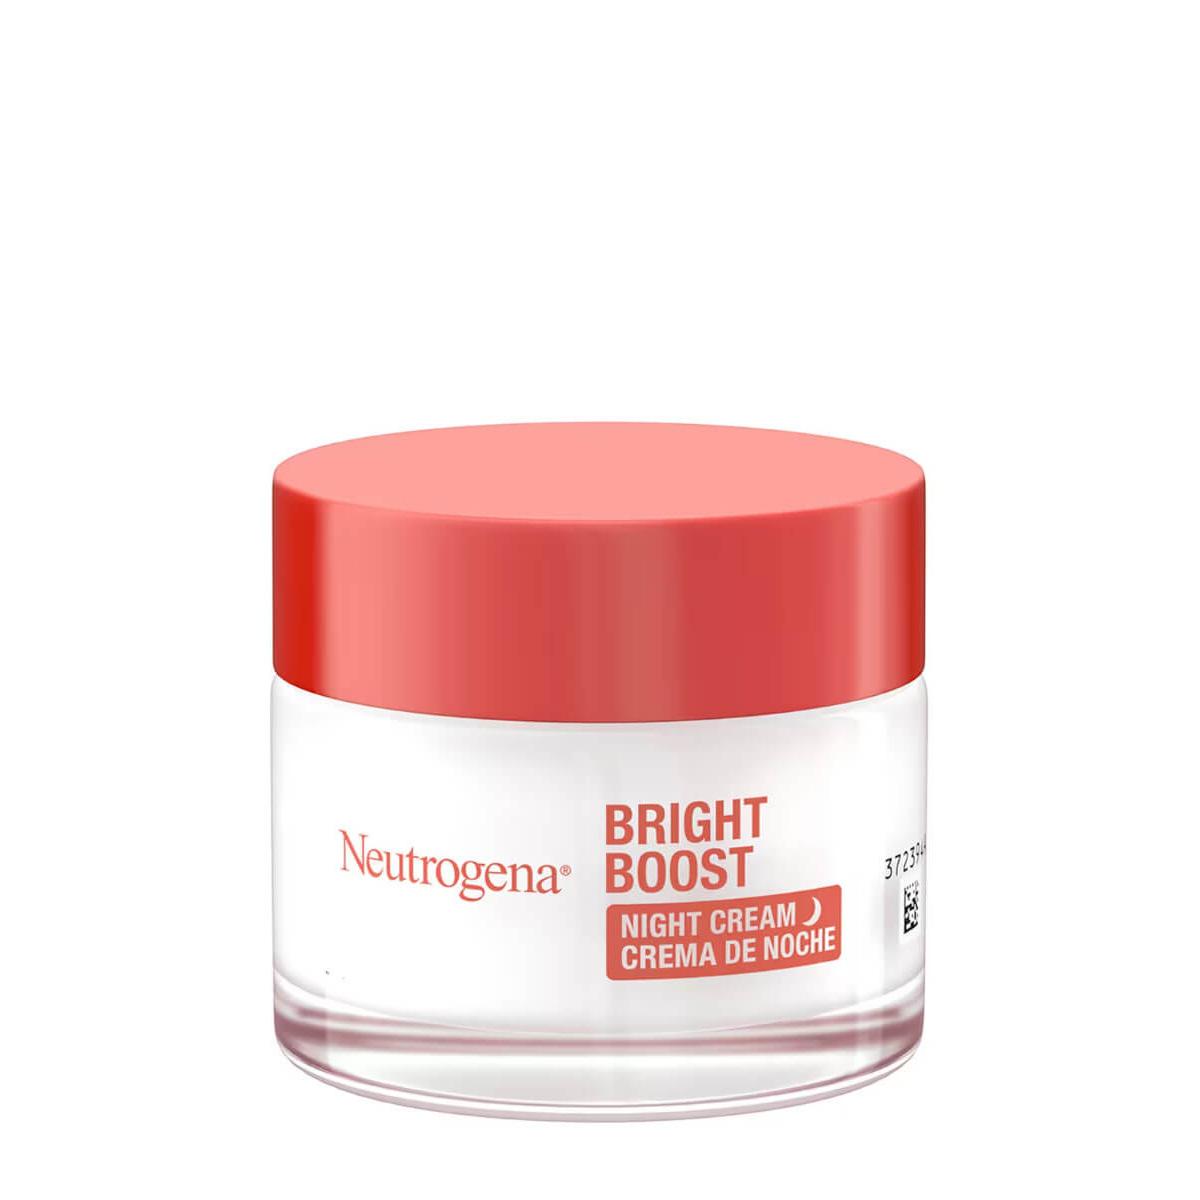 Neutrogena - Neutrogena bright boost crema noche 50ml